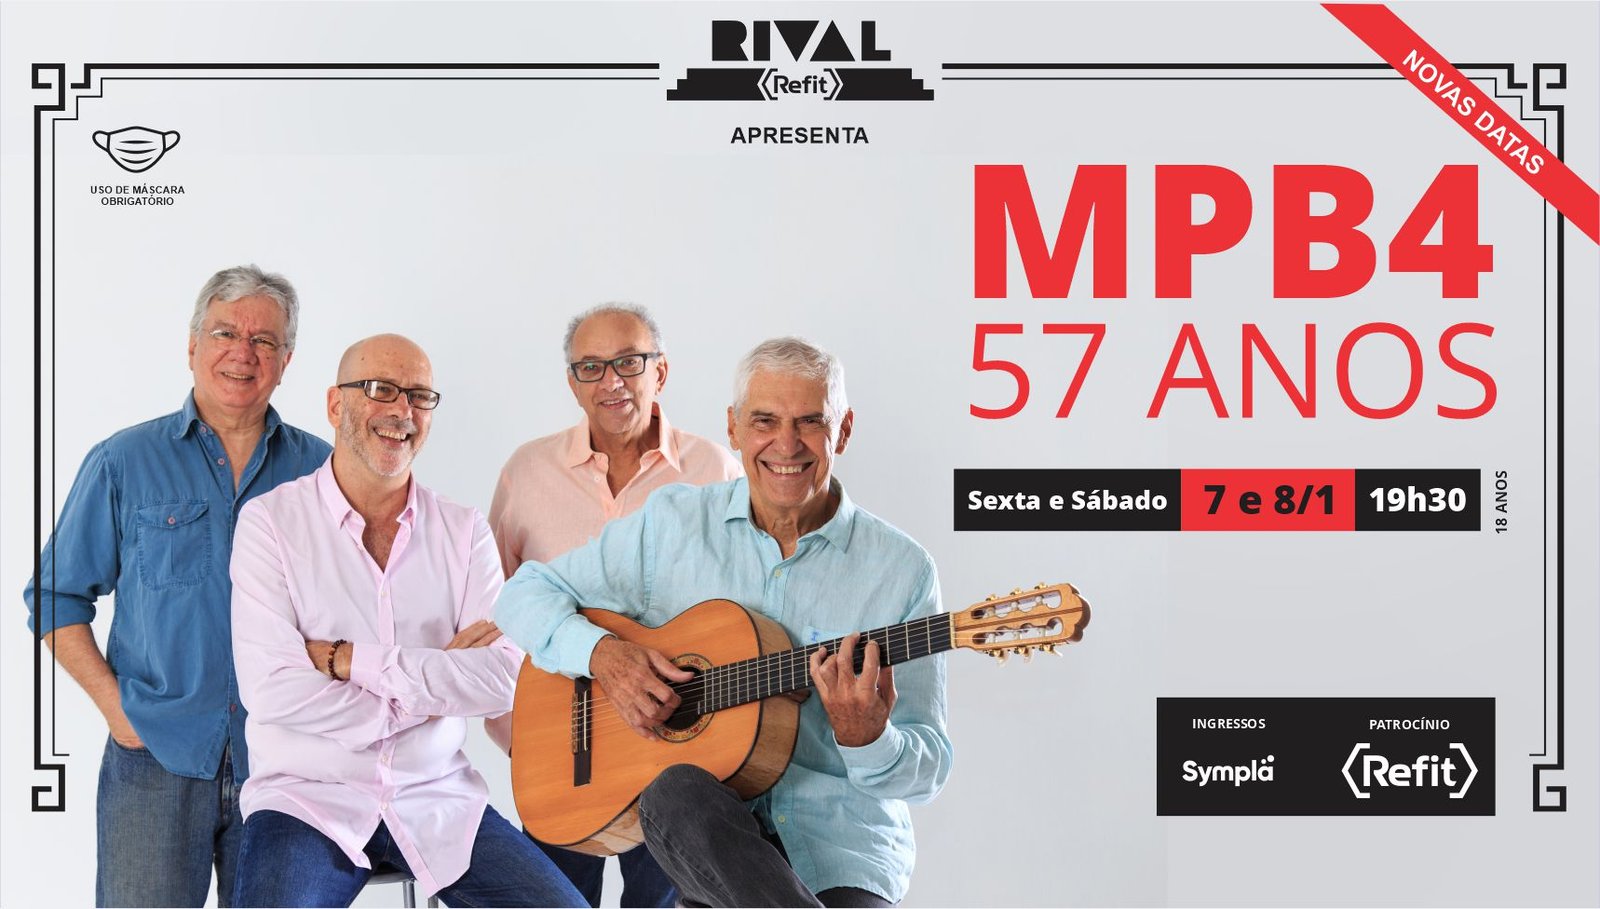 MPB4 – 57 anos – Novas datas